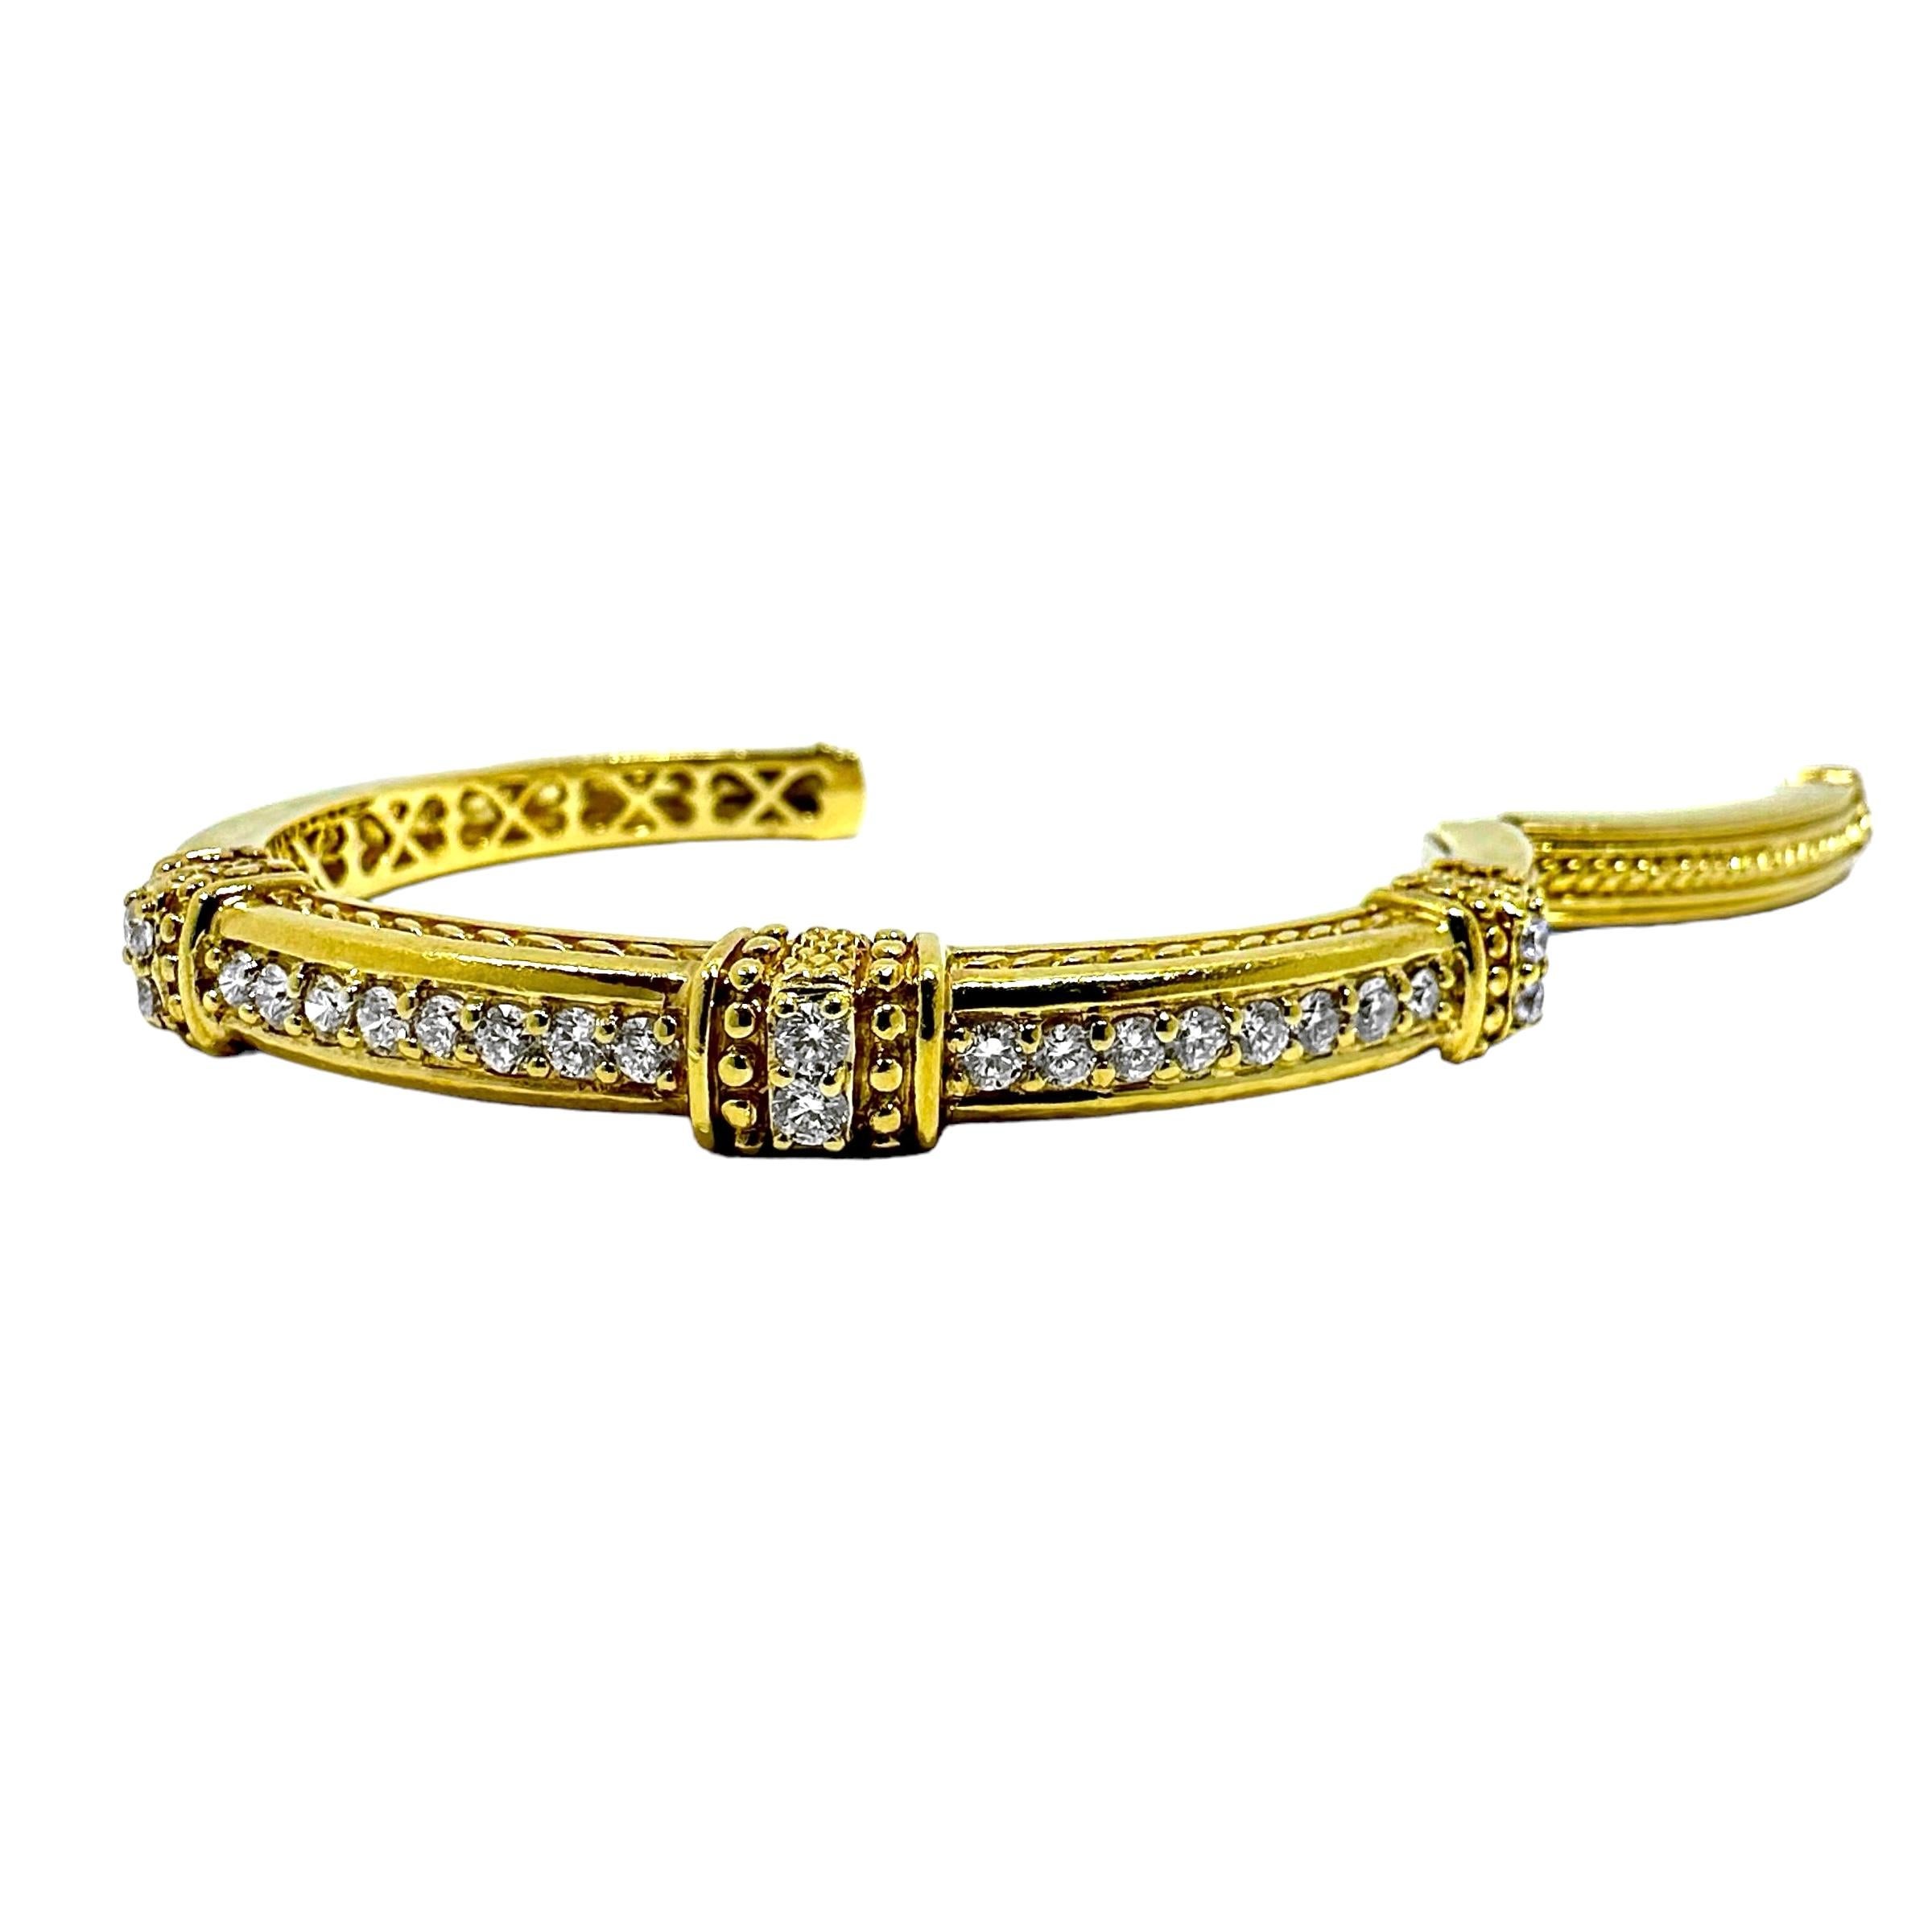 Vintage Judith Ripka Gold and Diamond Bangle Bracelet For Sale 4